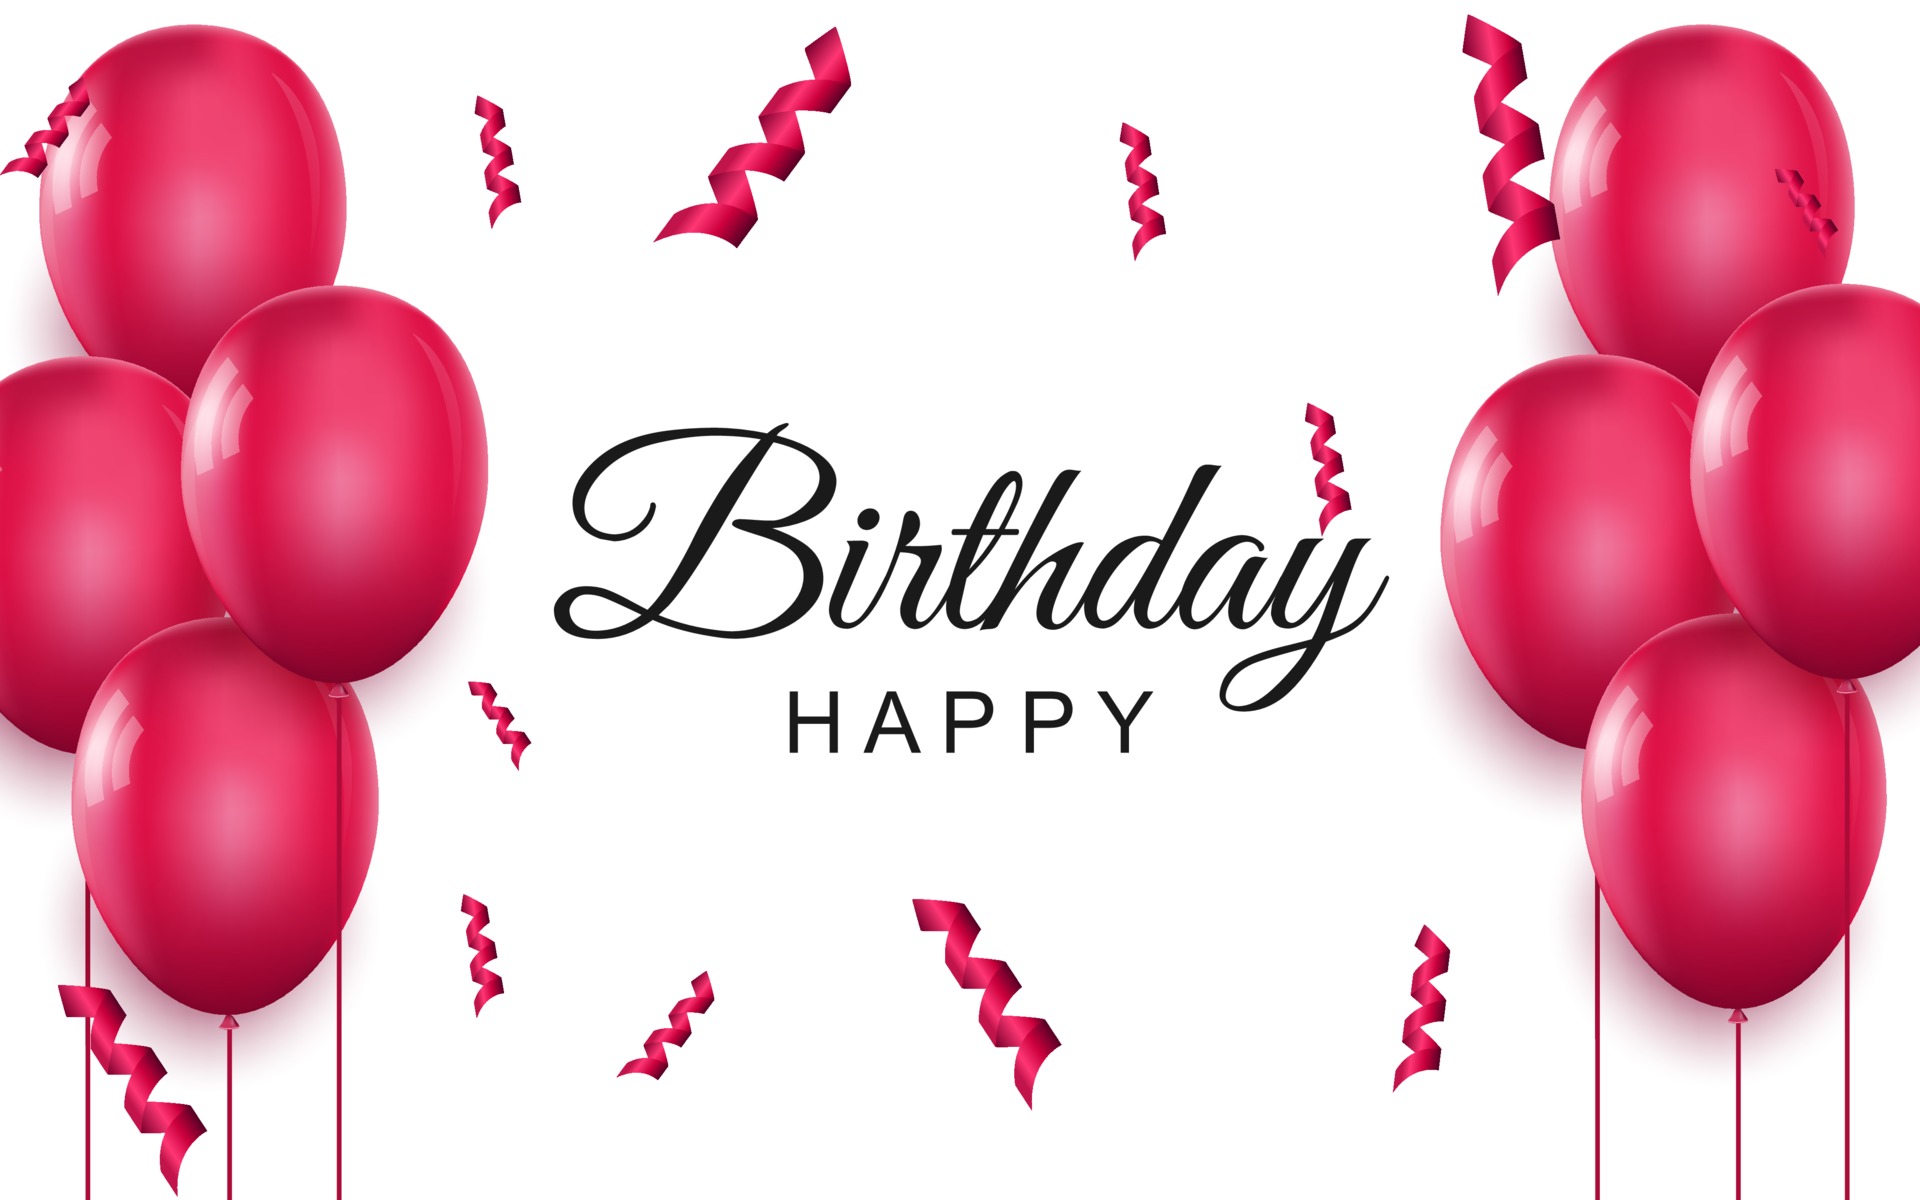 Happy birthday elegant greeting card pink air balloons and falling